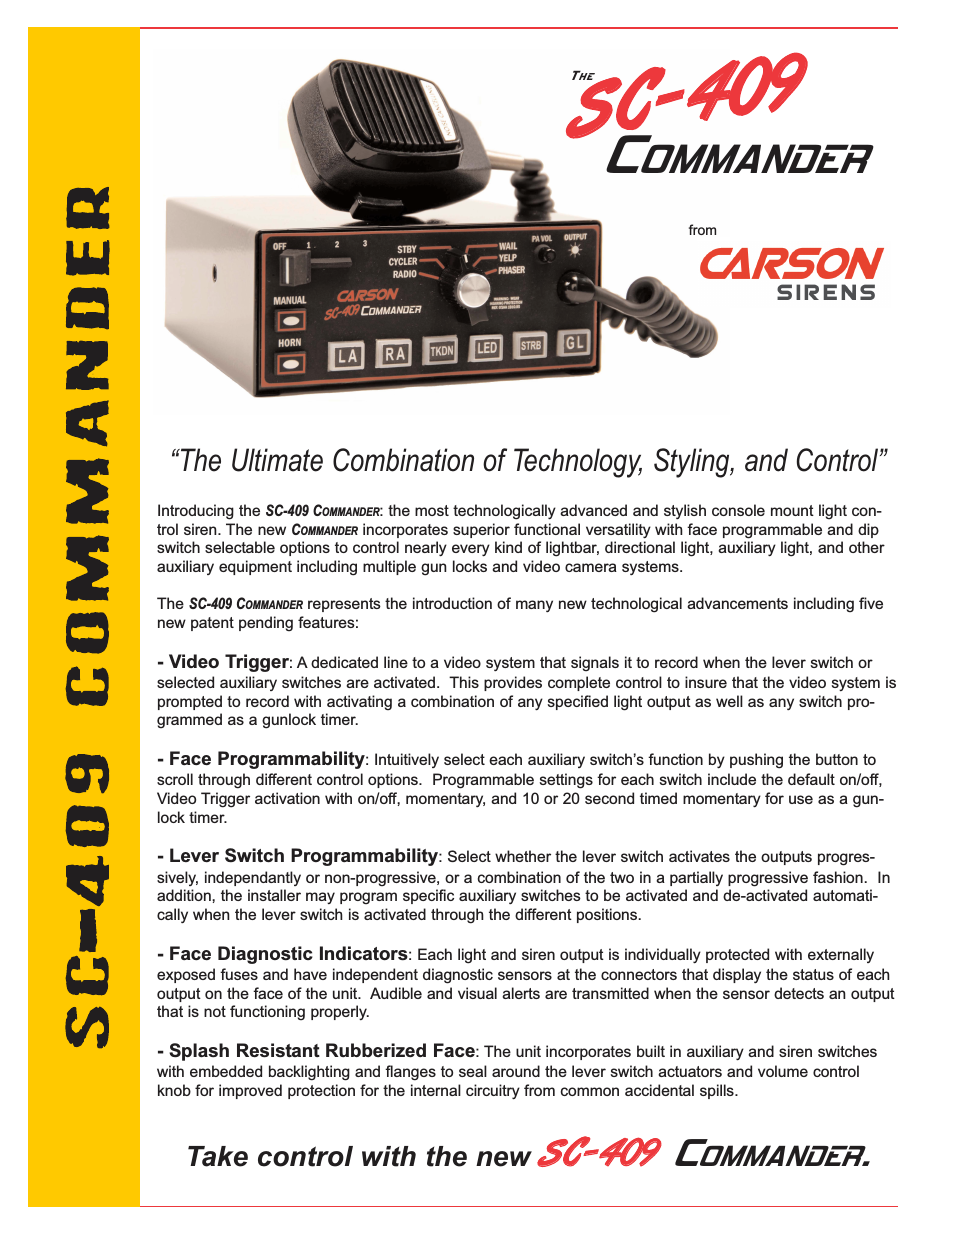 Commander SC-409